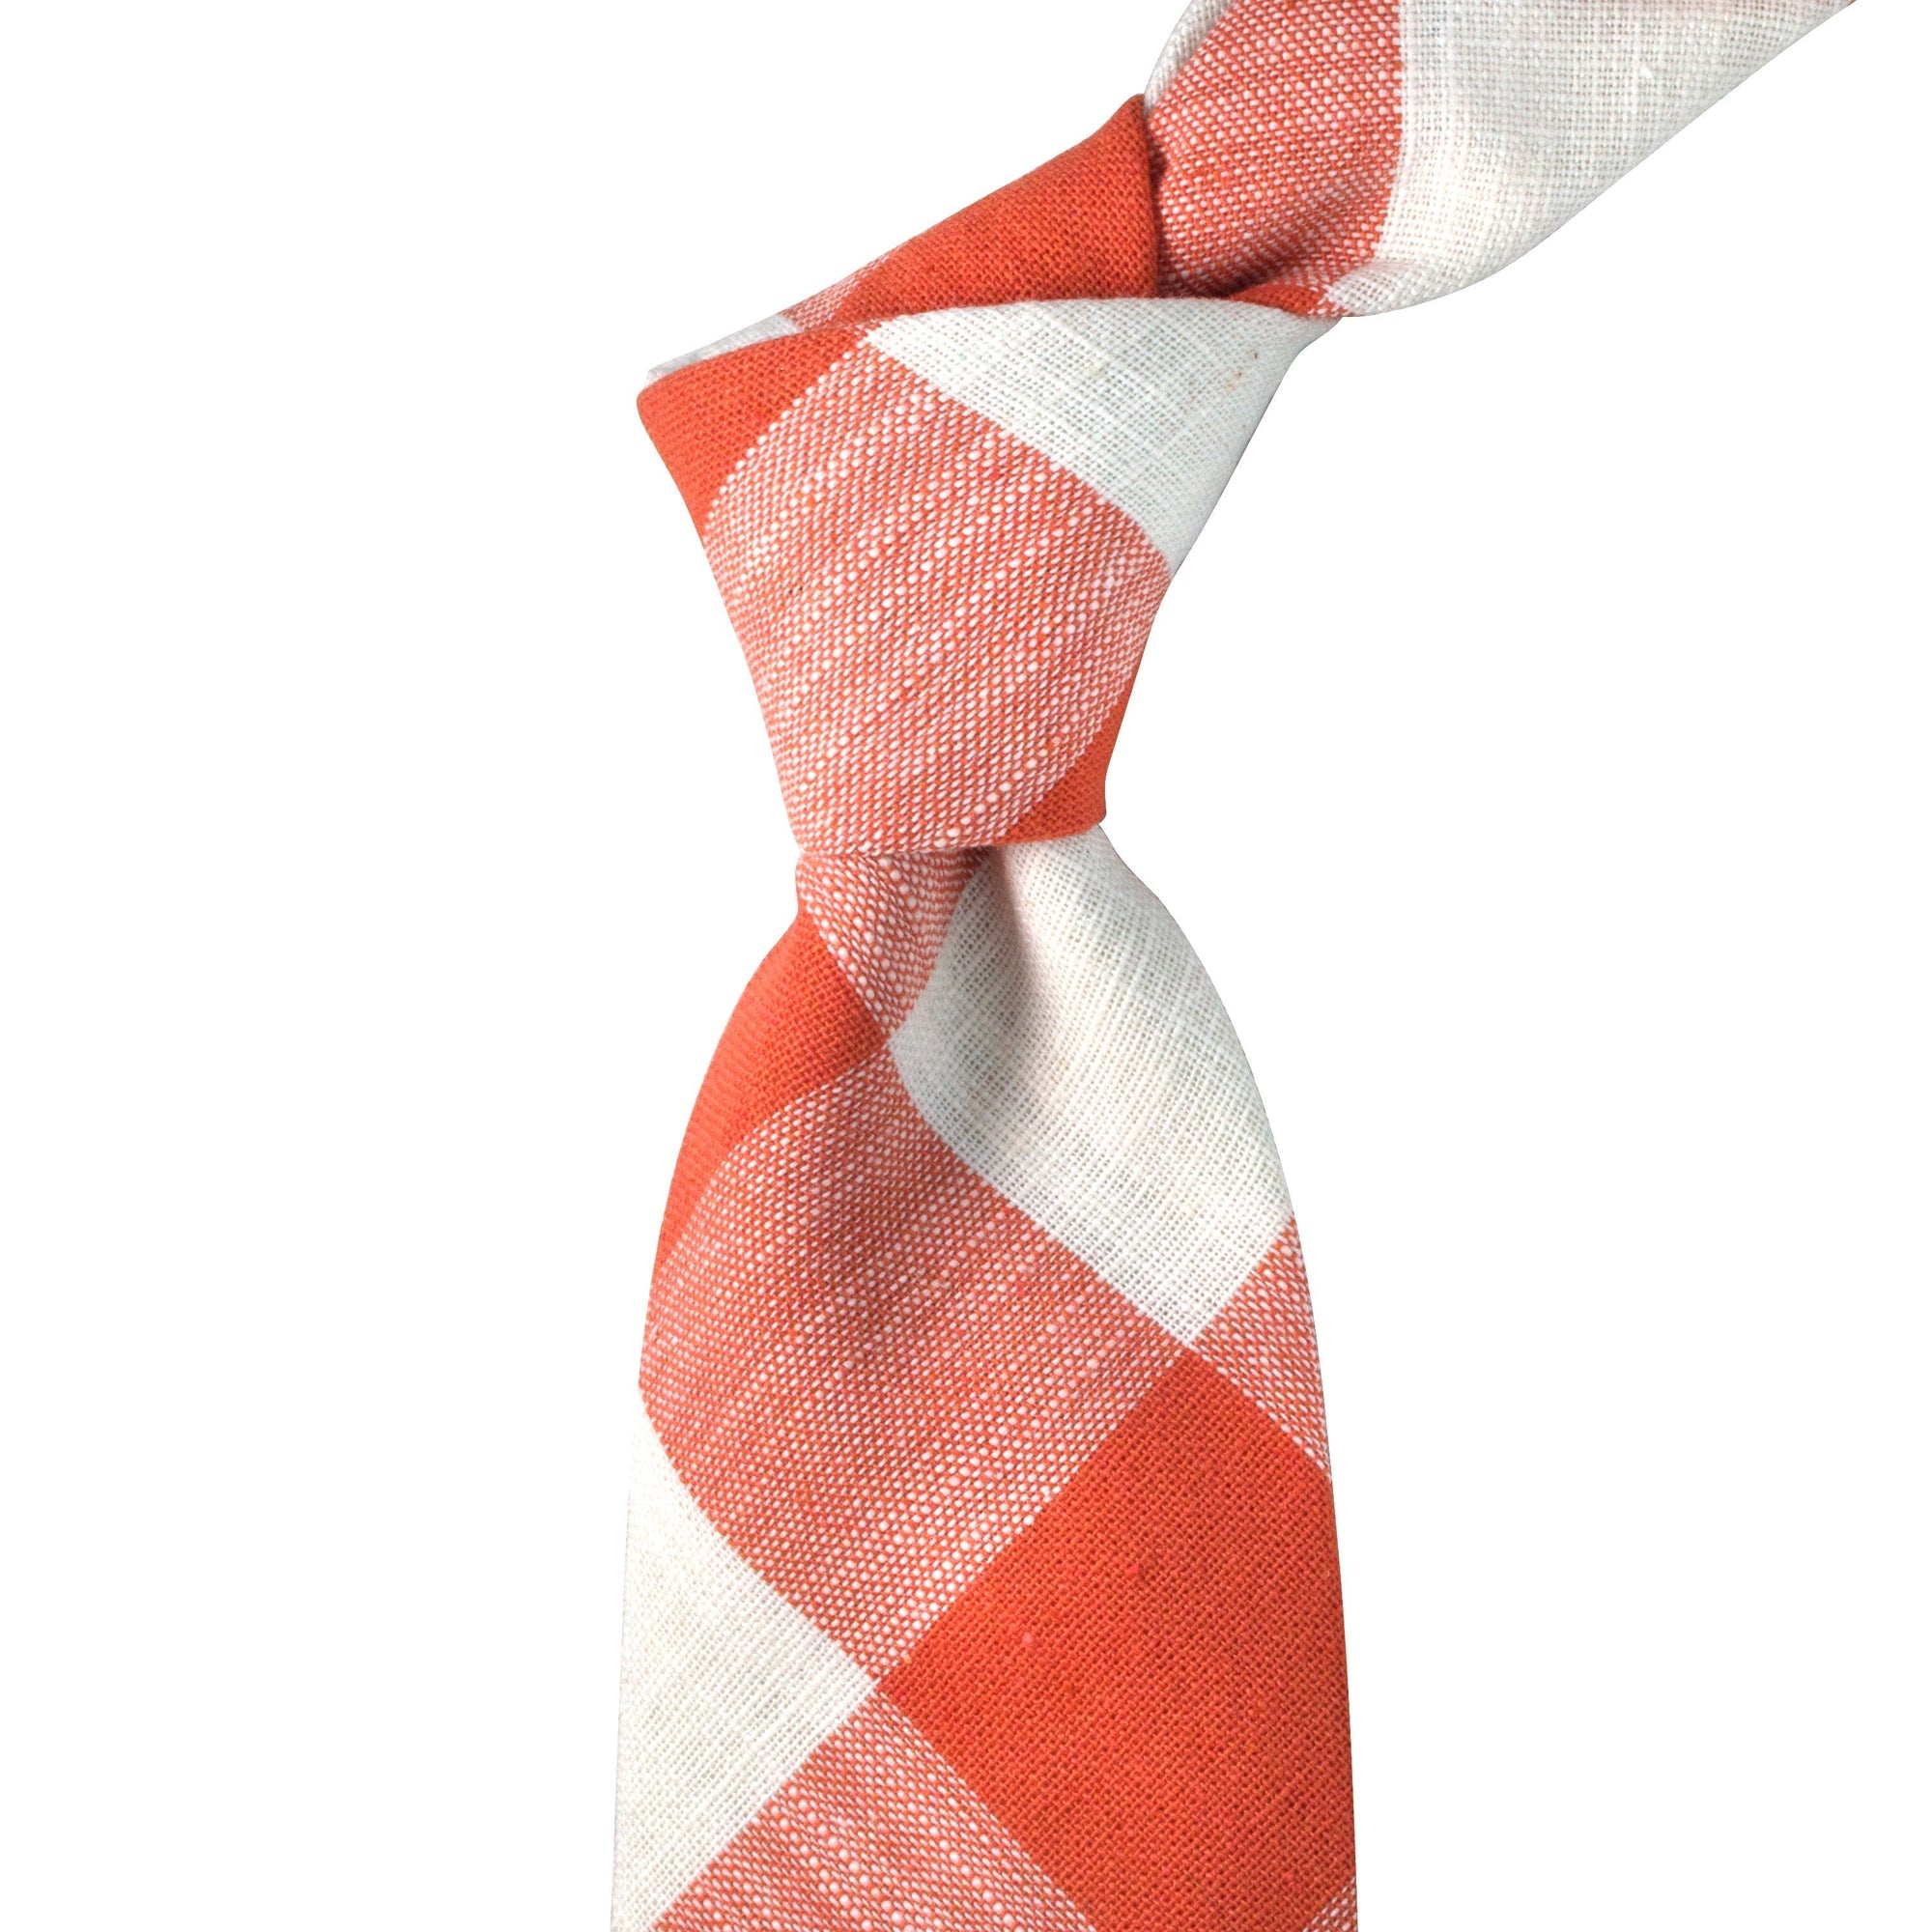 MarZthomson 8cm Wide Plaid Cotton Tie in Rust Orange and White-Cufflinks.com.sg | Neckties.com.sg